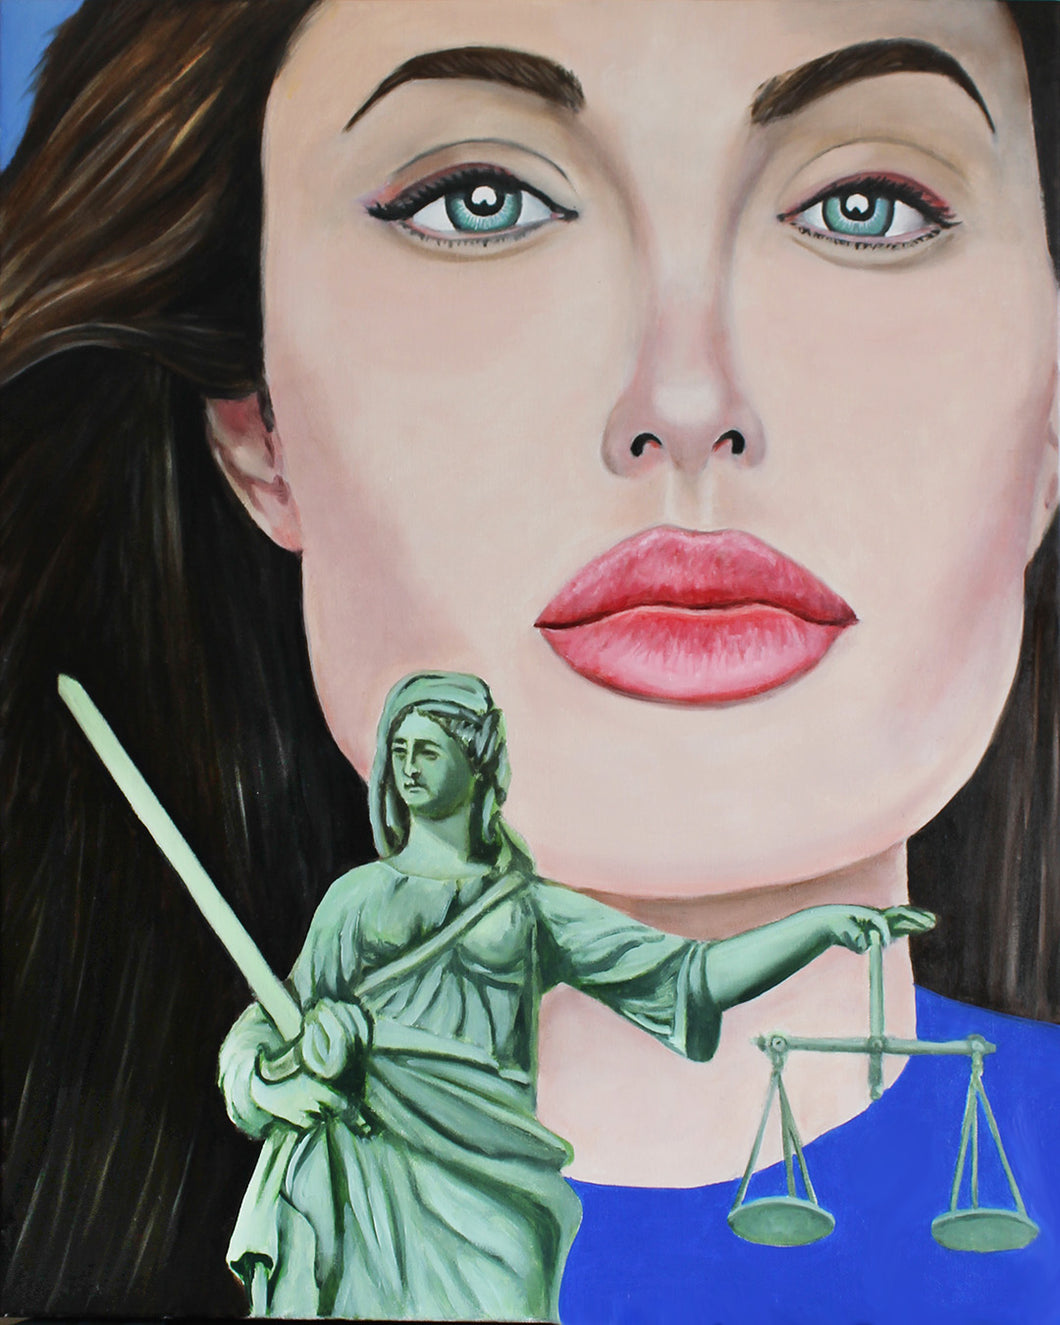 Tarot - Angelina Jolie as Justice